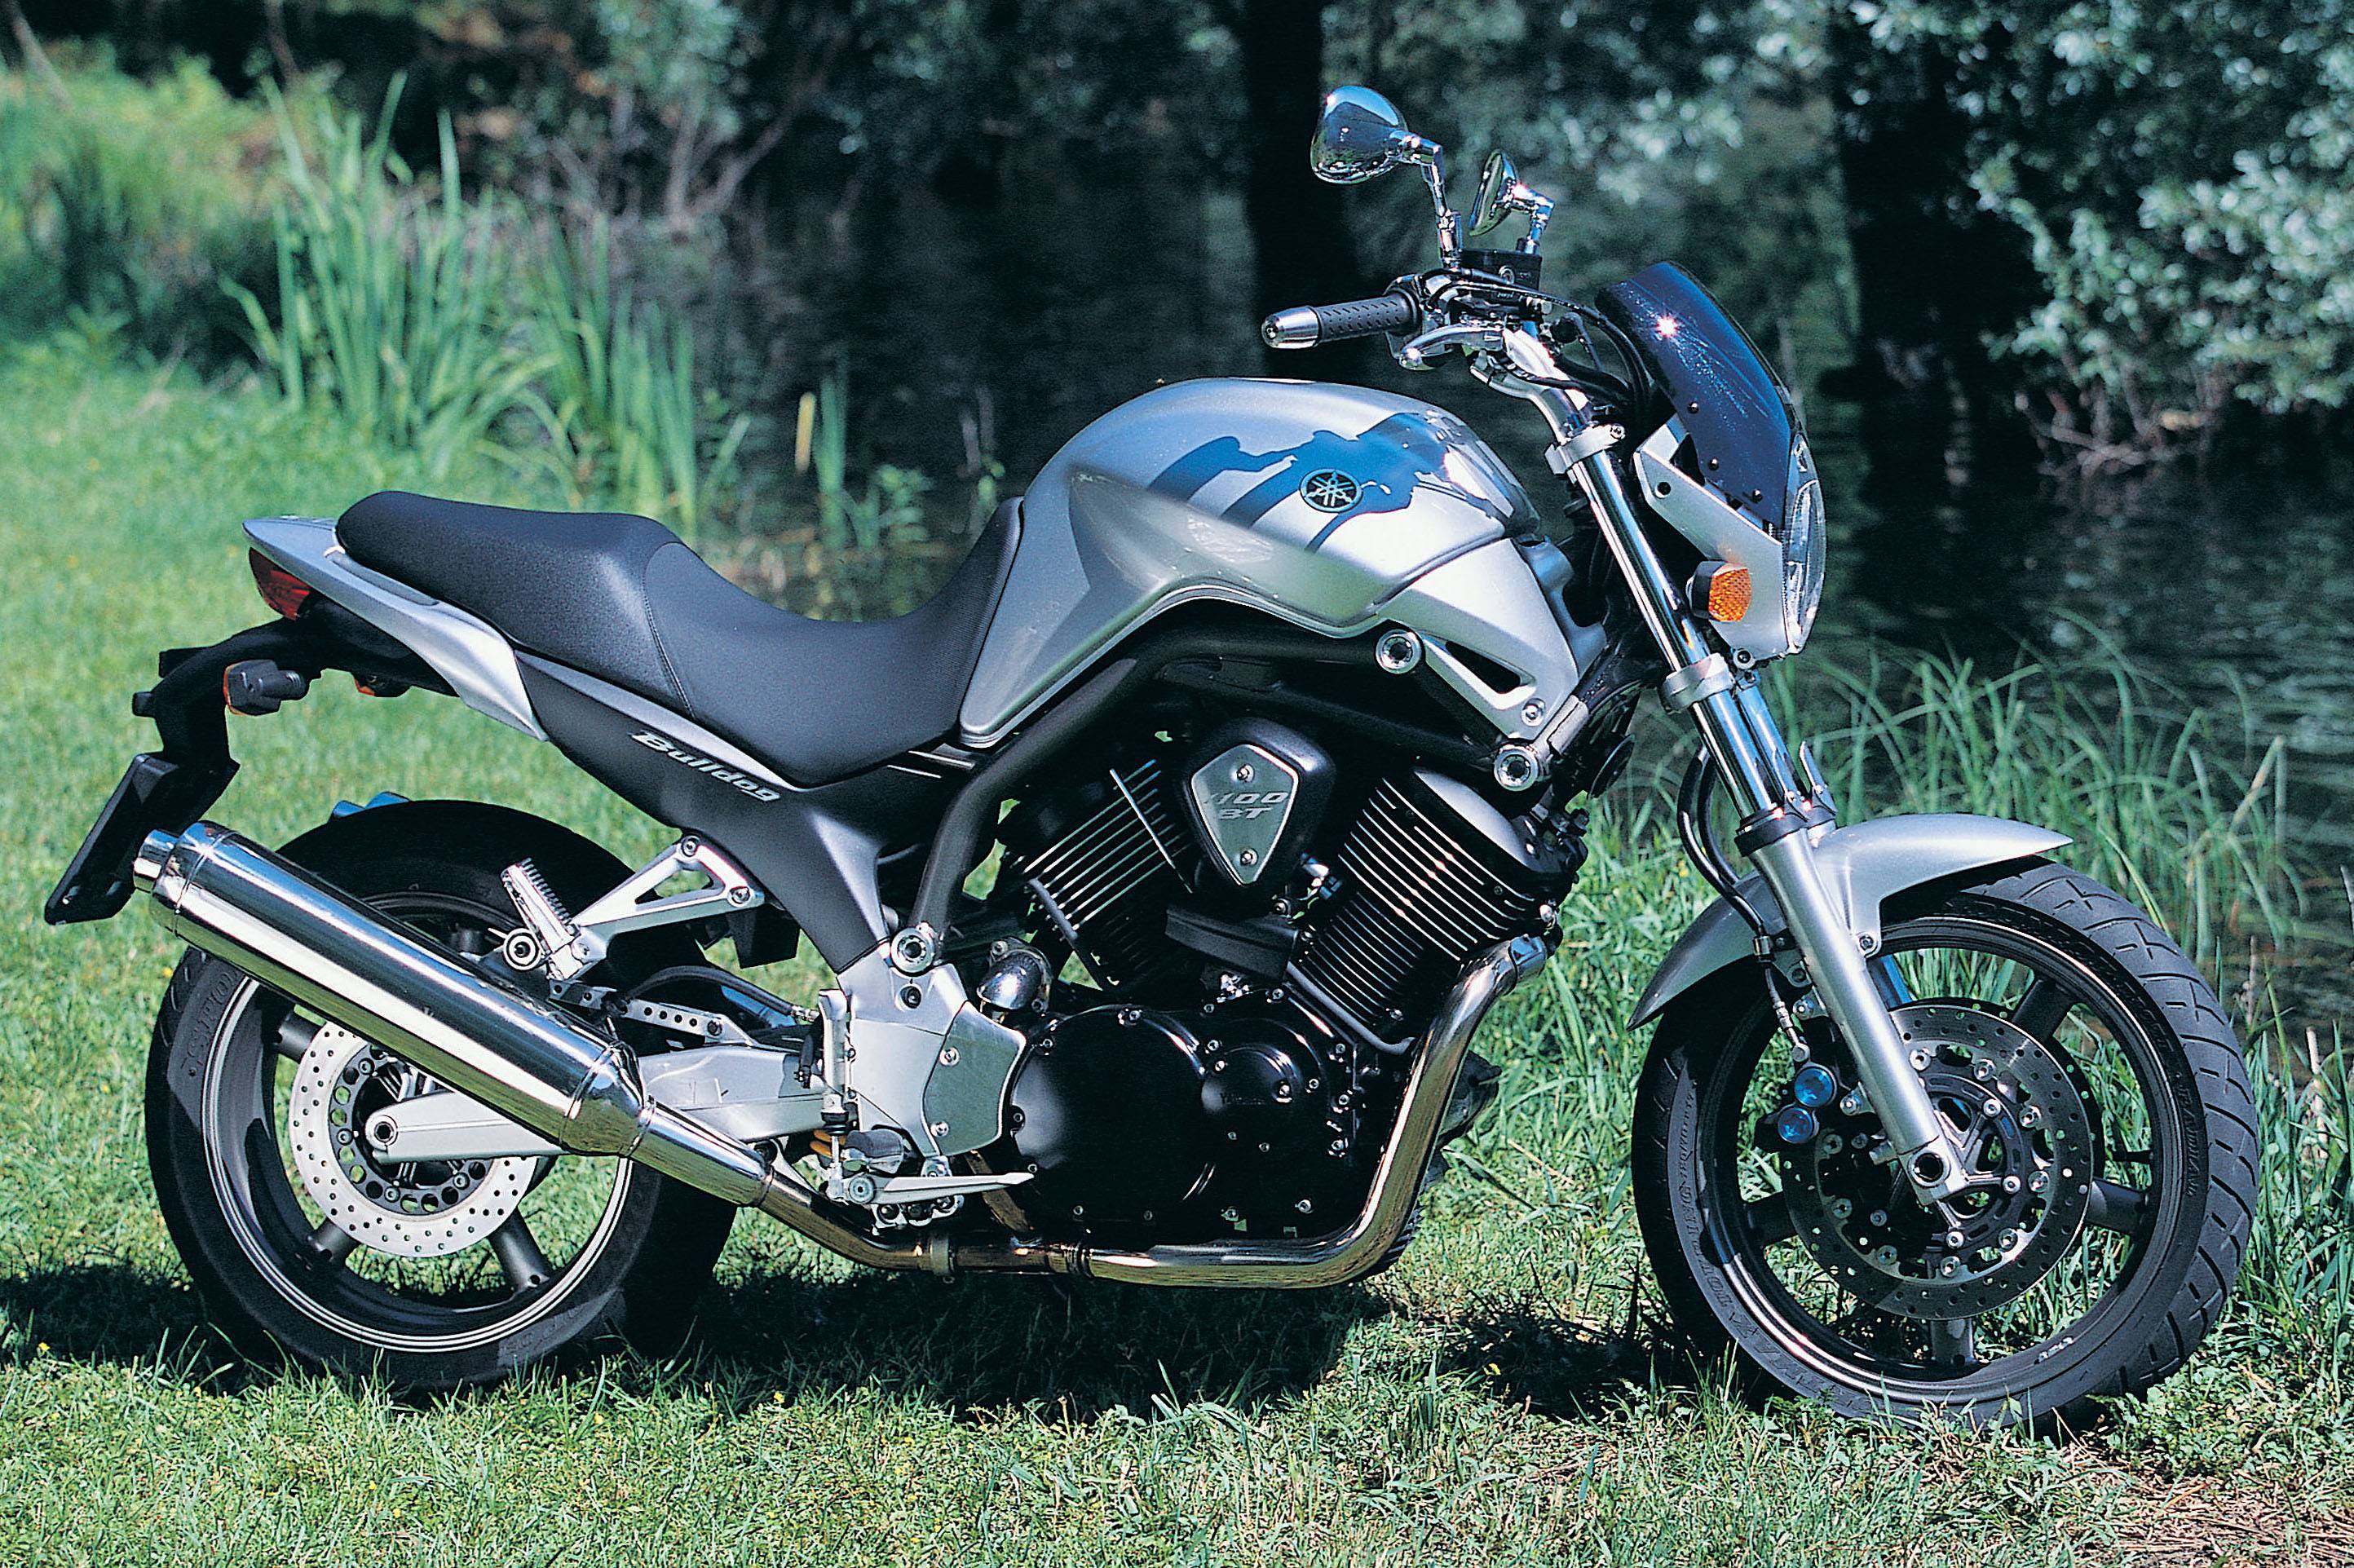 Yamaha bt 1100 bulldog: review, history, specs